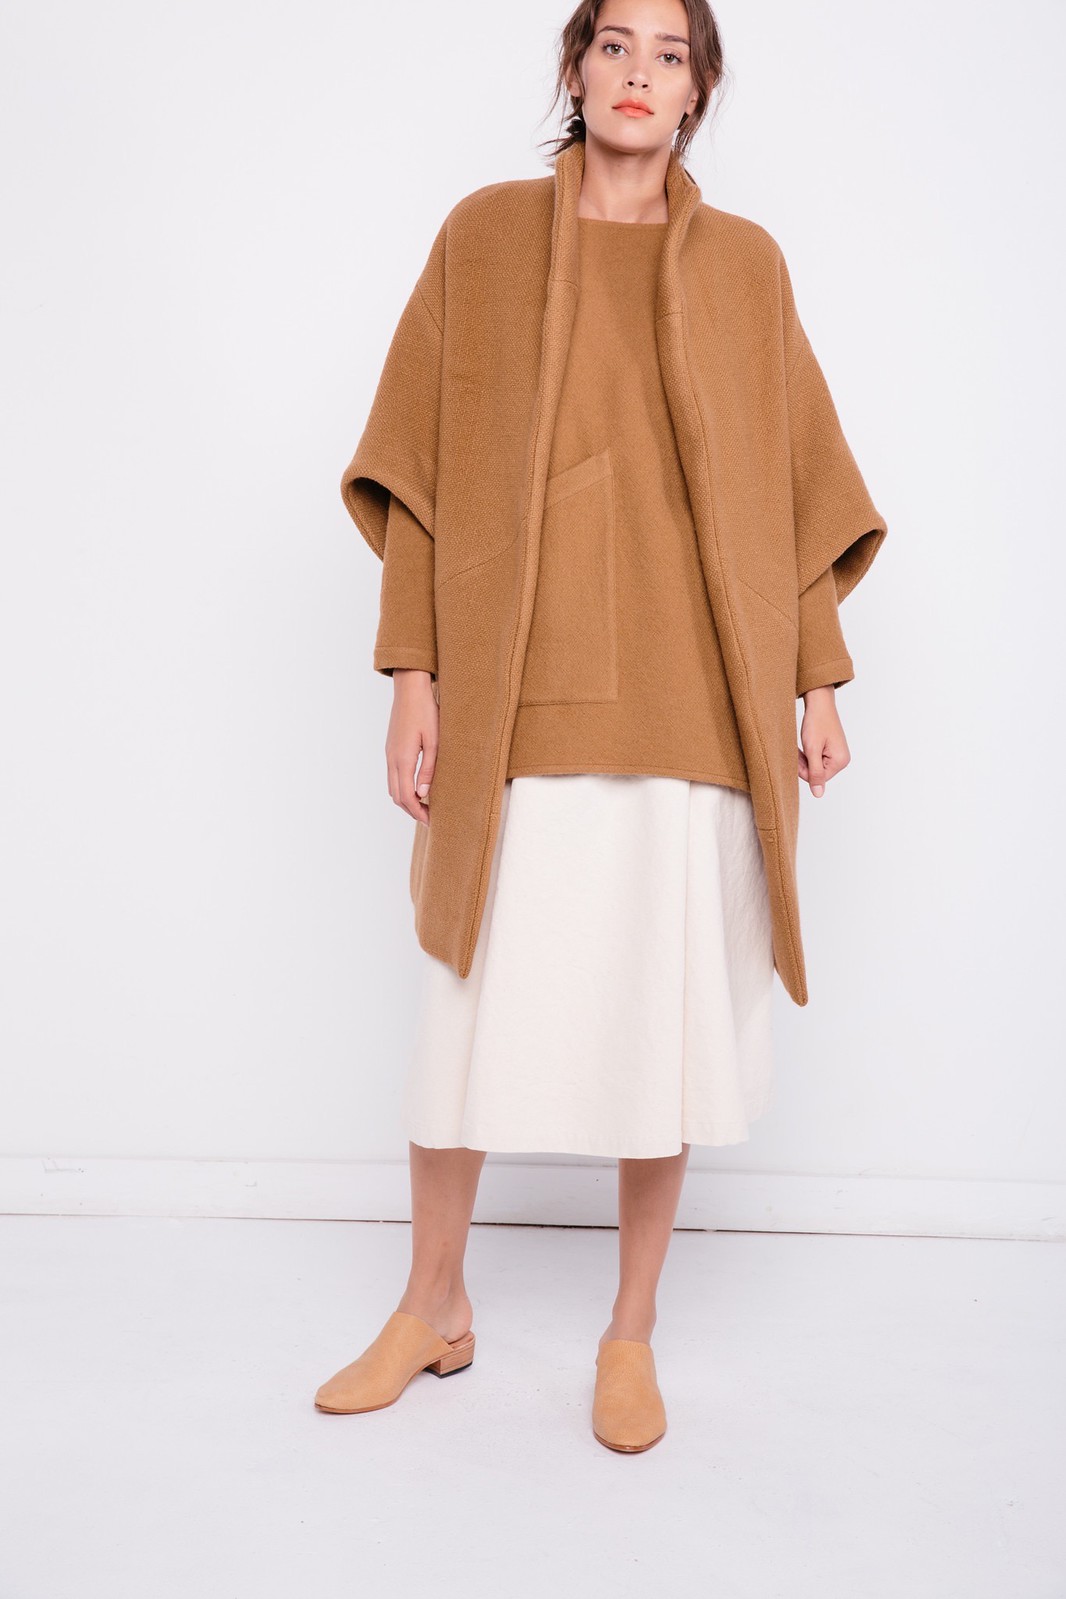 04-elizabeth-suzann-product-harper-tunic-camel-felted-wool